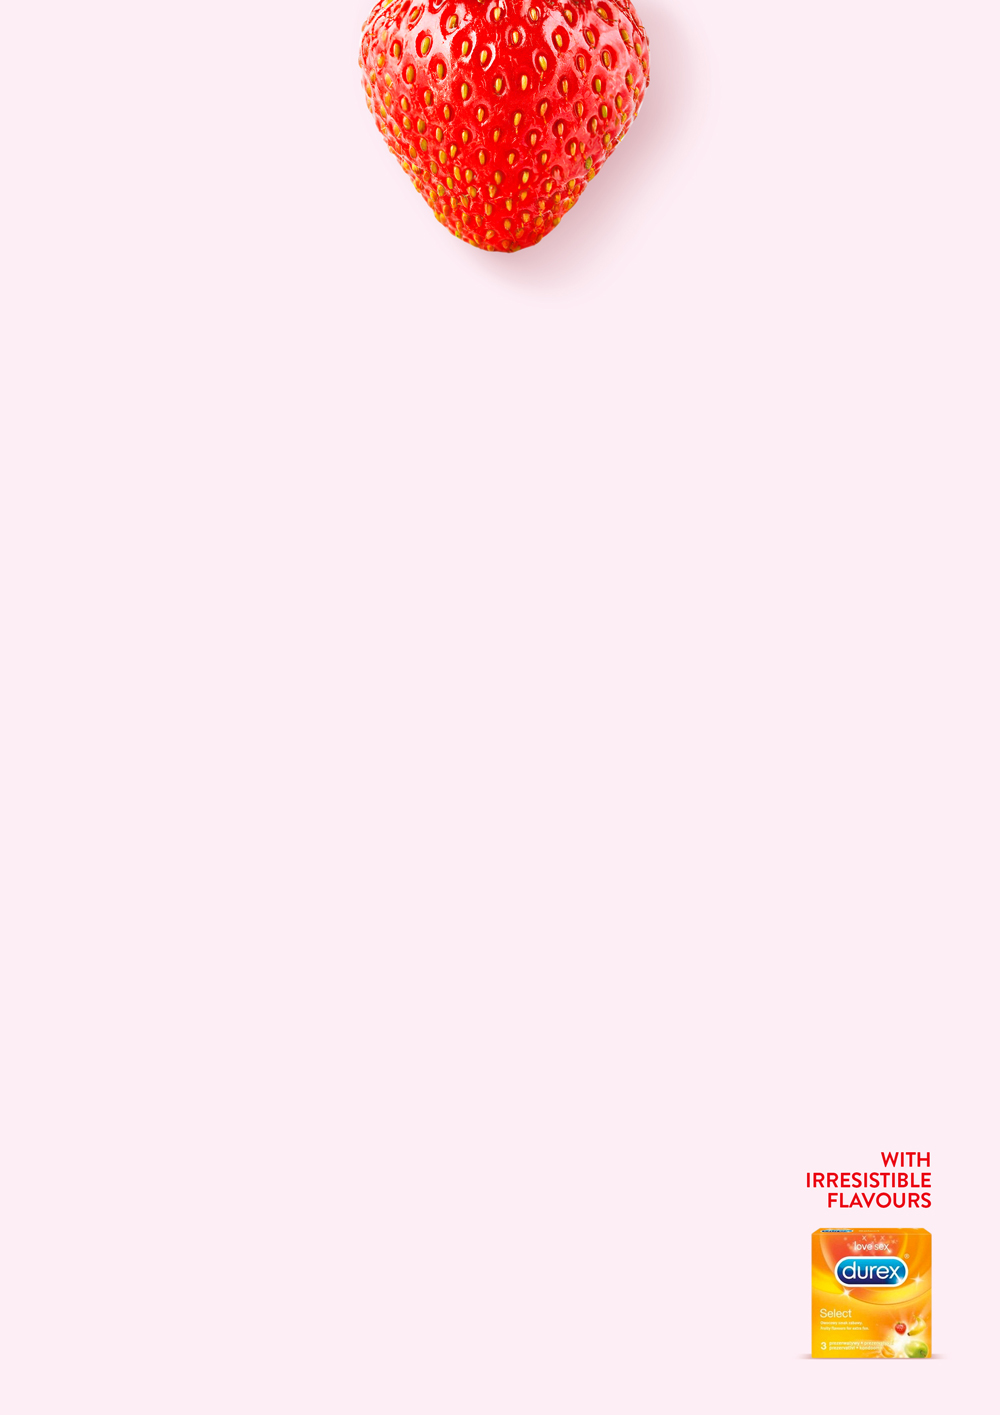 creative ads advertisement strawberry Fruit